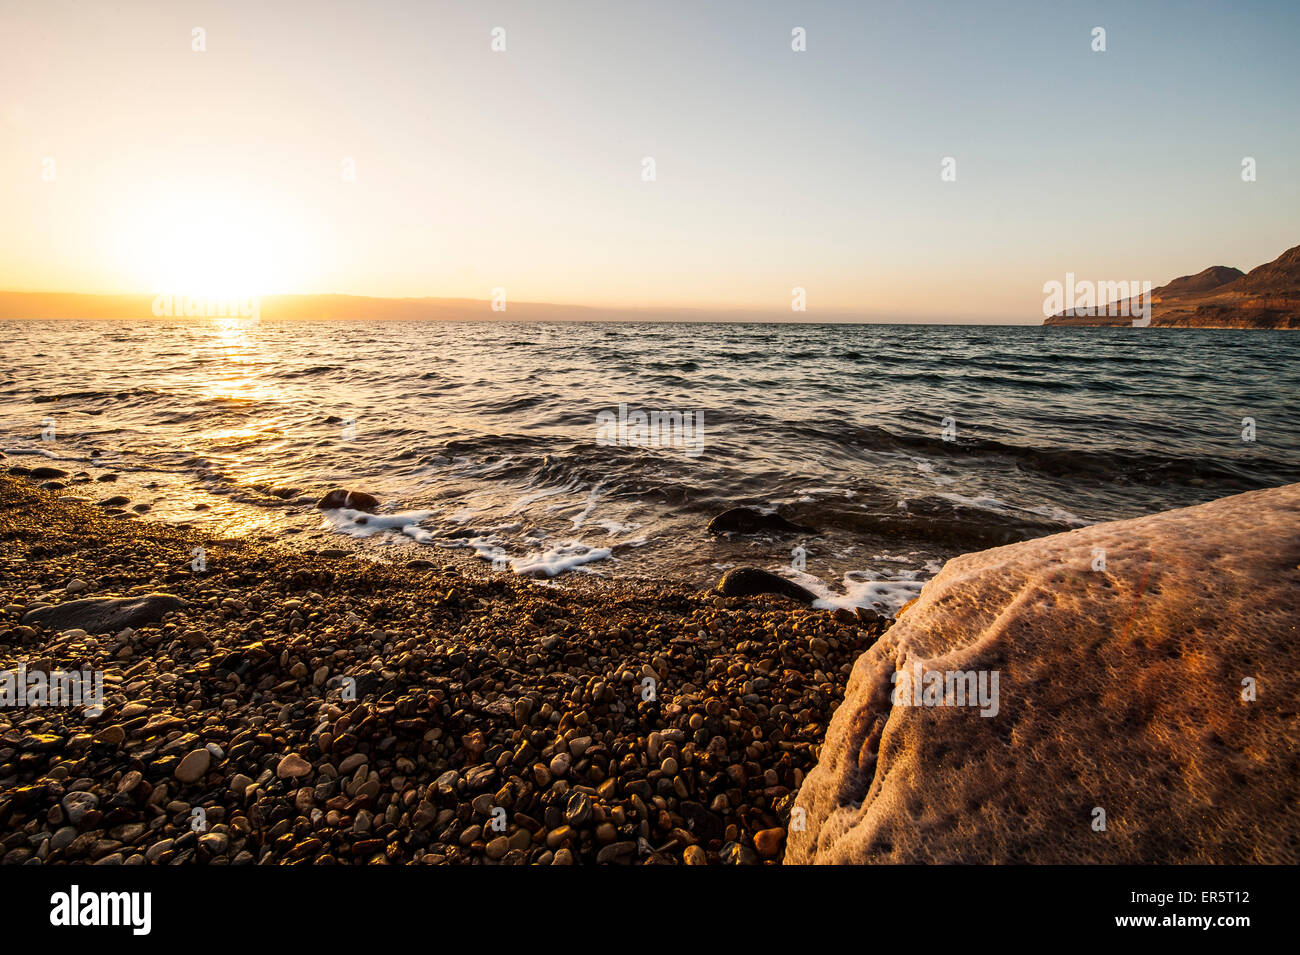 Salt encrusted stone in dead sea at sunset, Jordan, Middle East Stock Photo